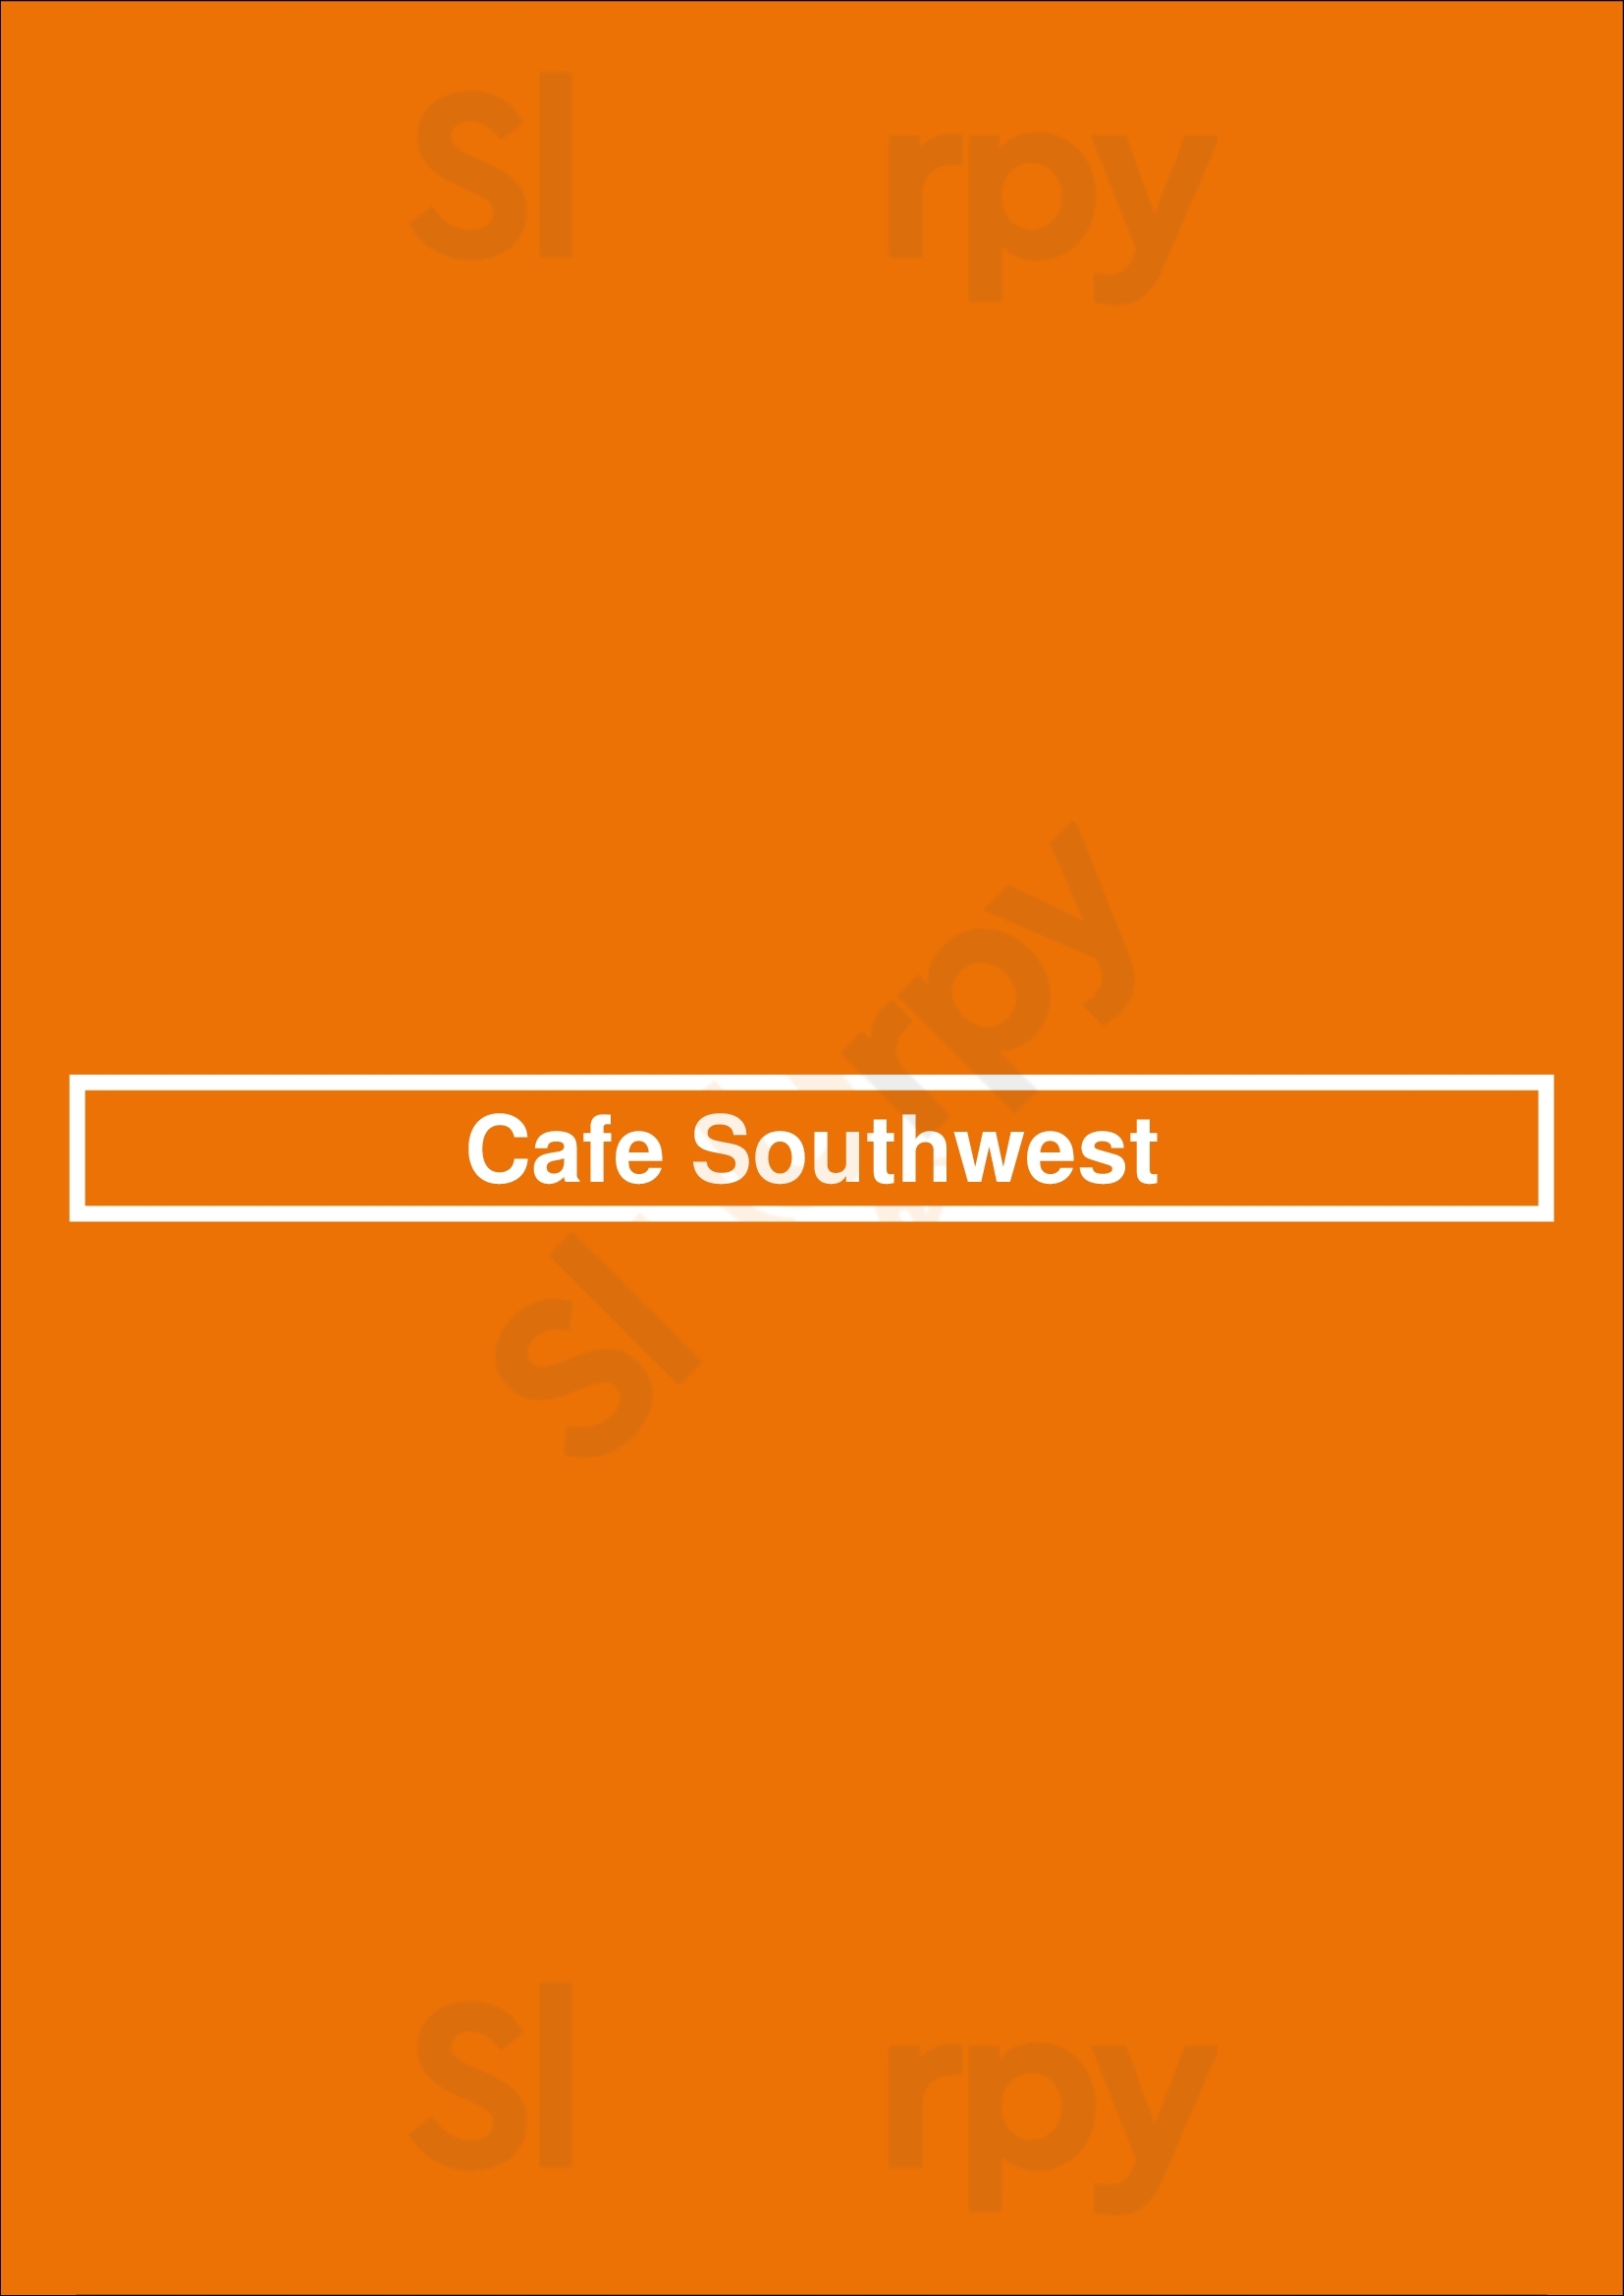 Cafe Southwest Los Angeles Menu - 1